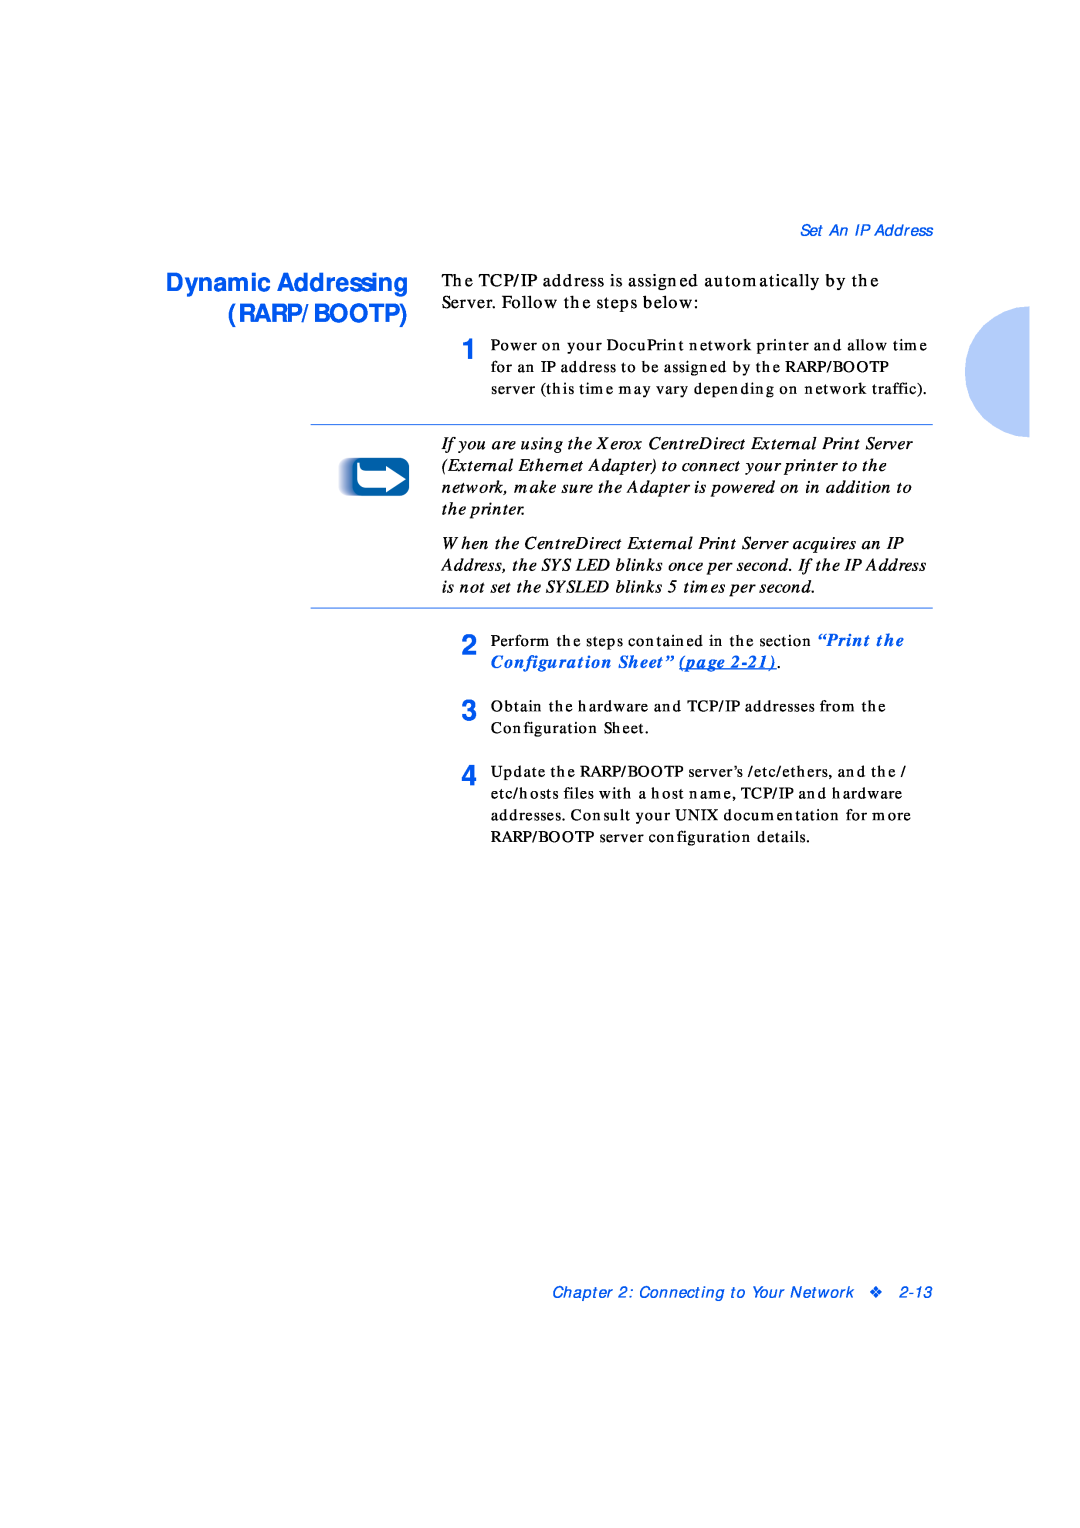 Xerox Network Laser Printers manual Dynamic Addressing RARP/BOOTP, Configuration Sheet” page 